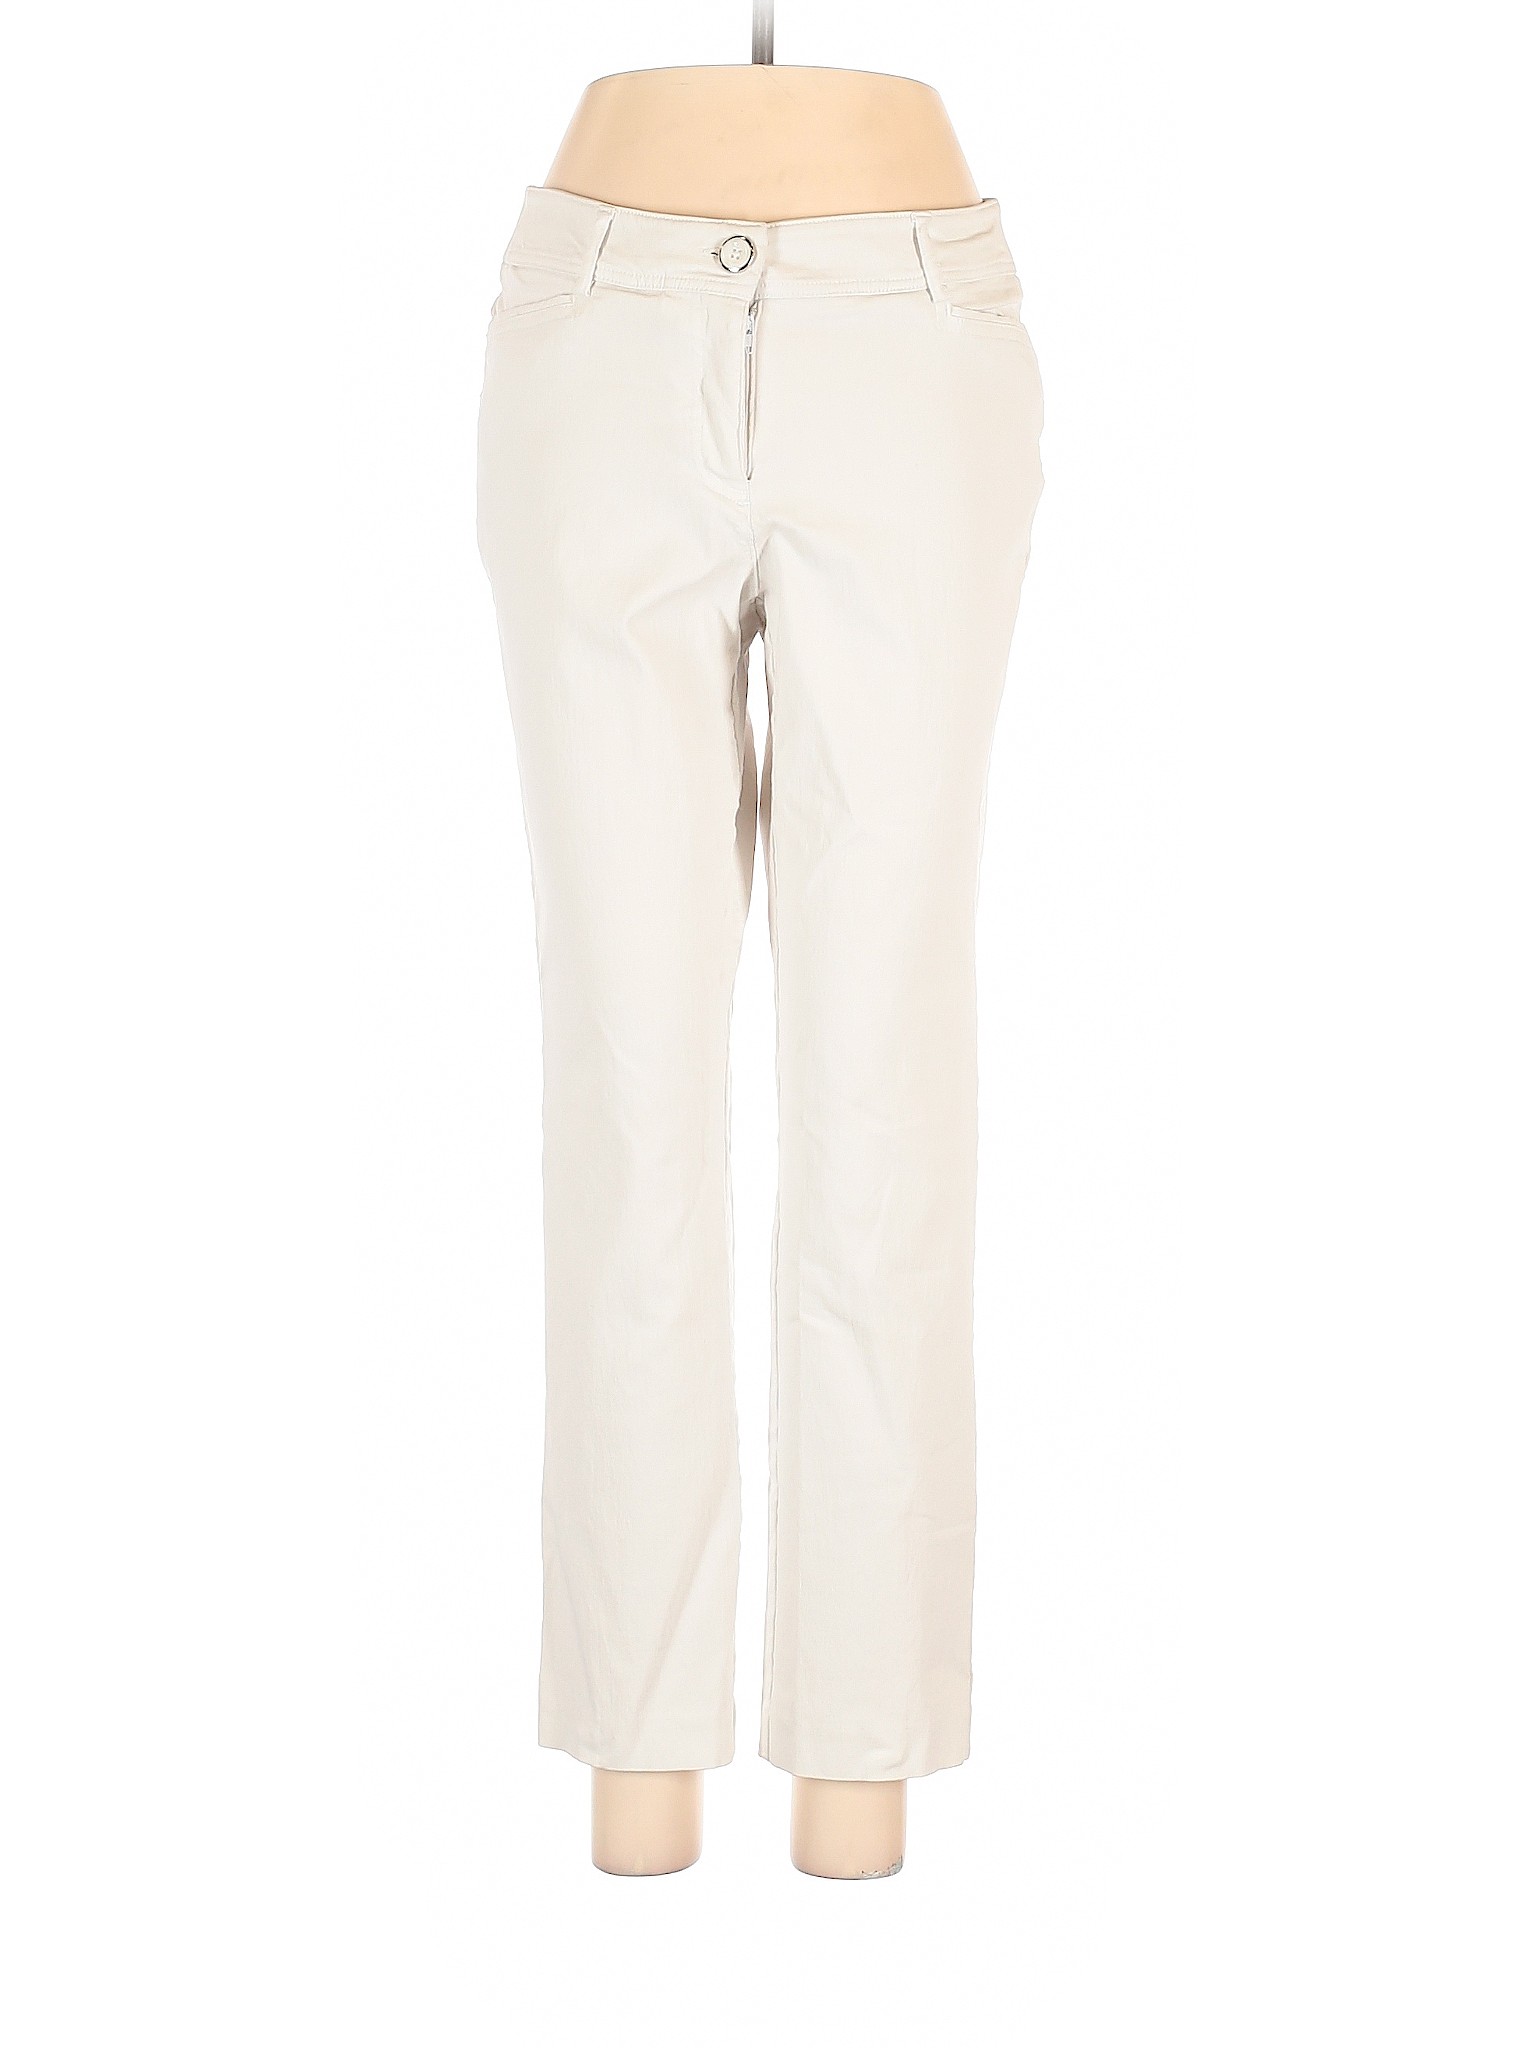 Counterparts Women Ivory Jeans 6 Petites | eBay